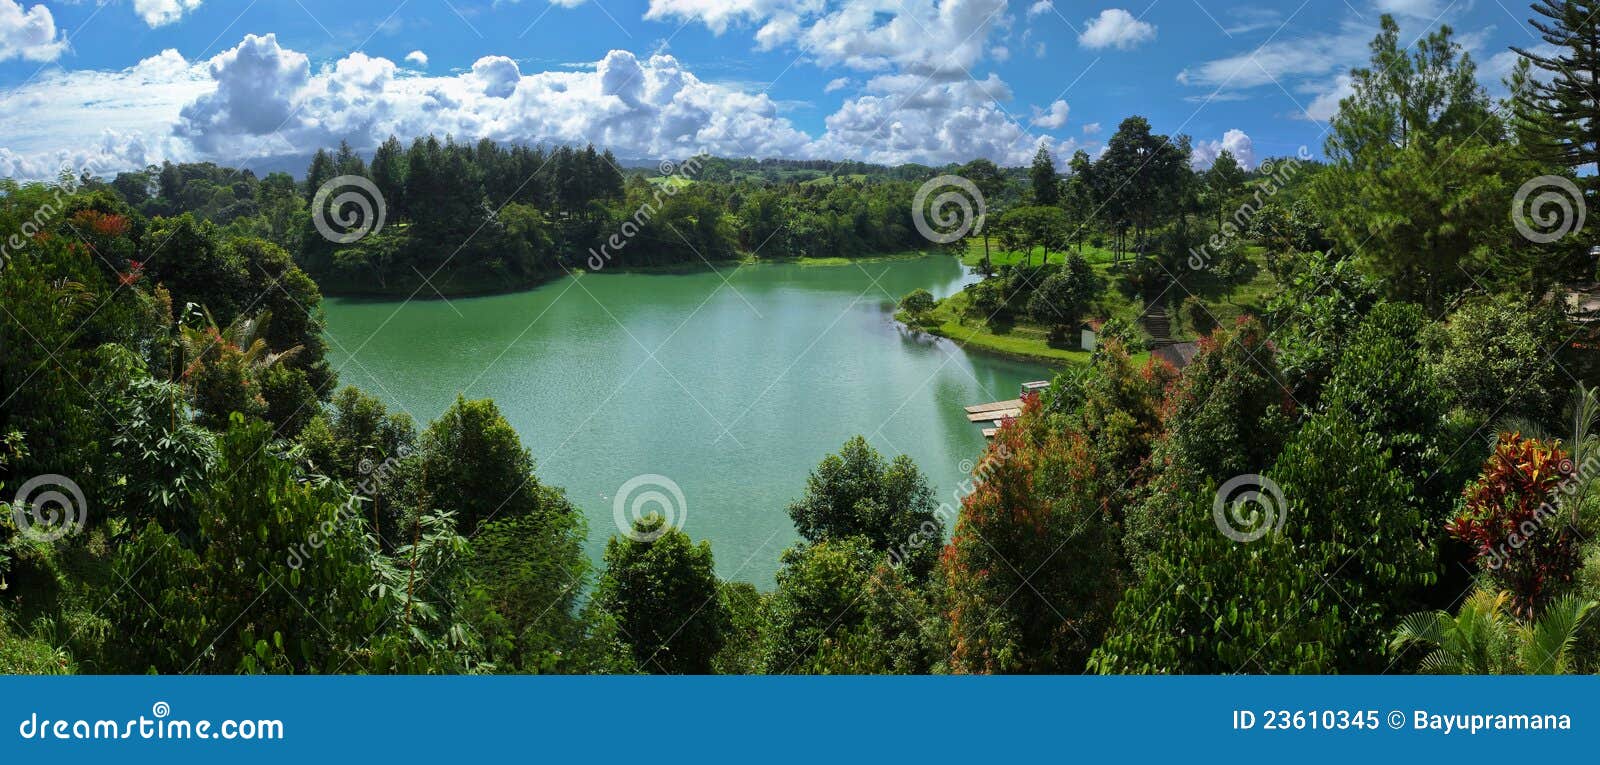 panorama scenics of lido lake